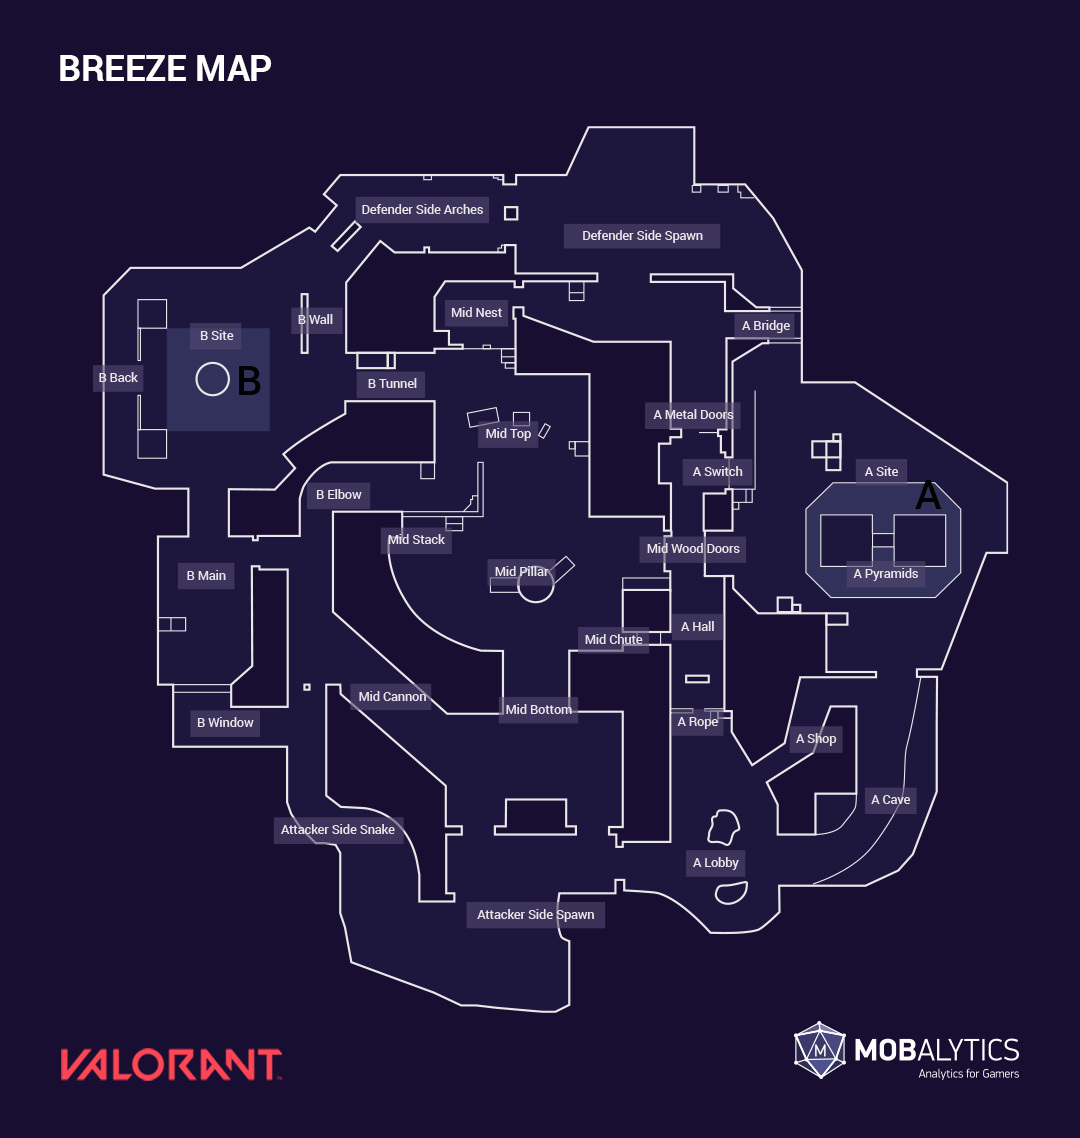 Valorant Breeze Map article version